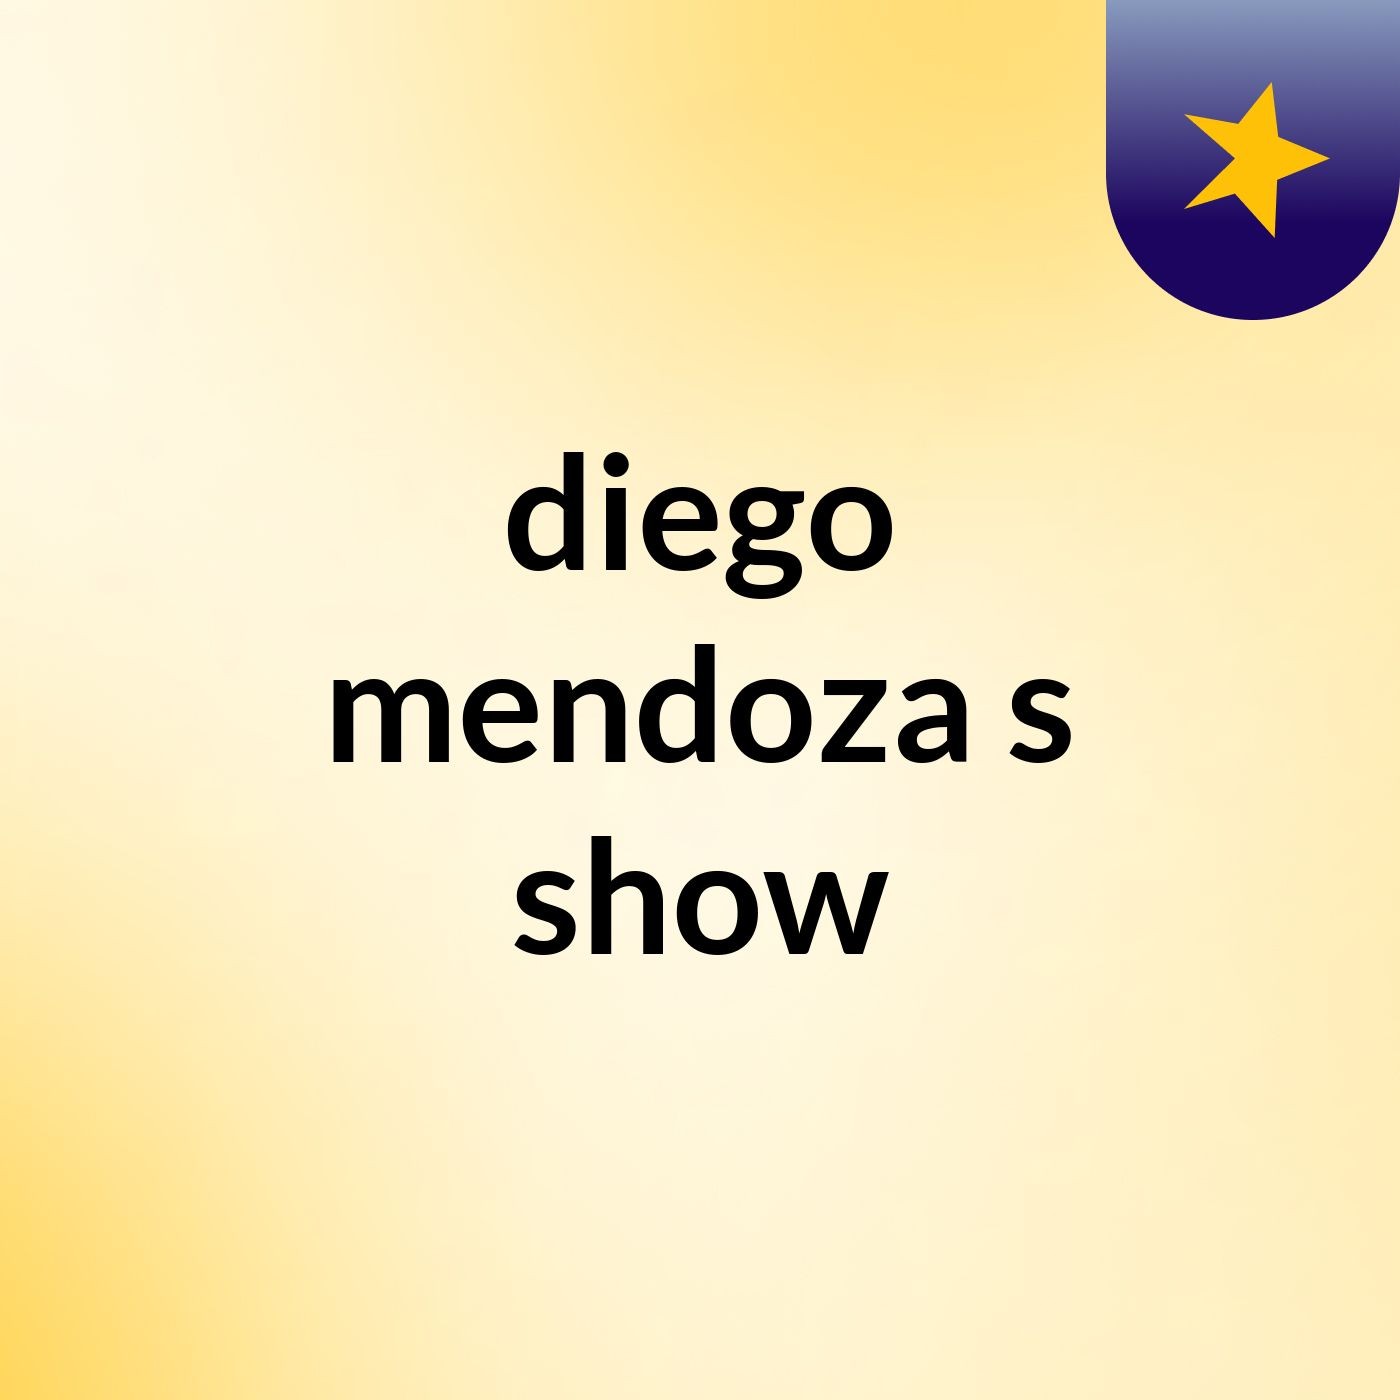 diego mendoza's show